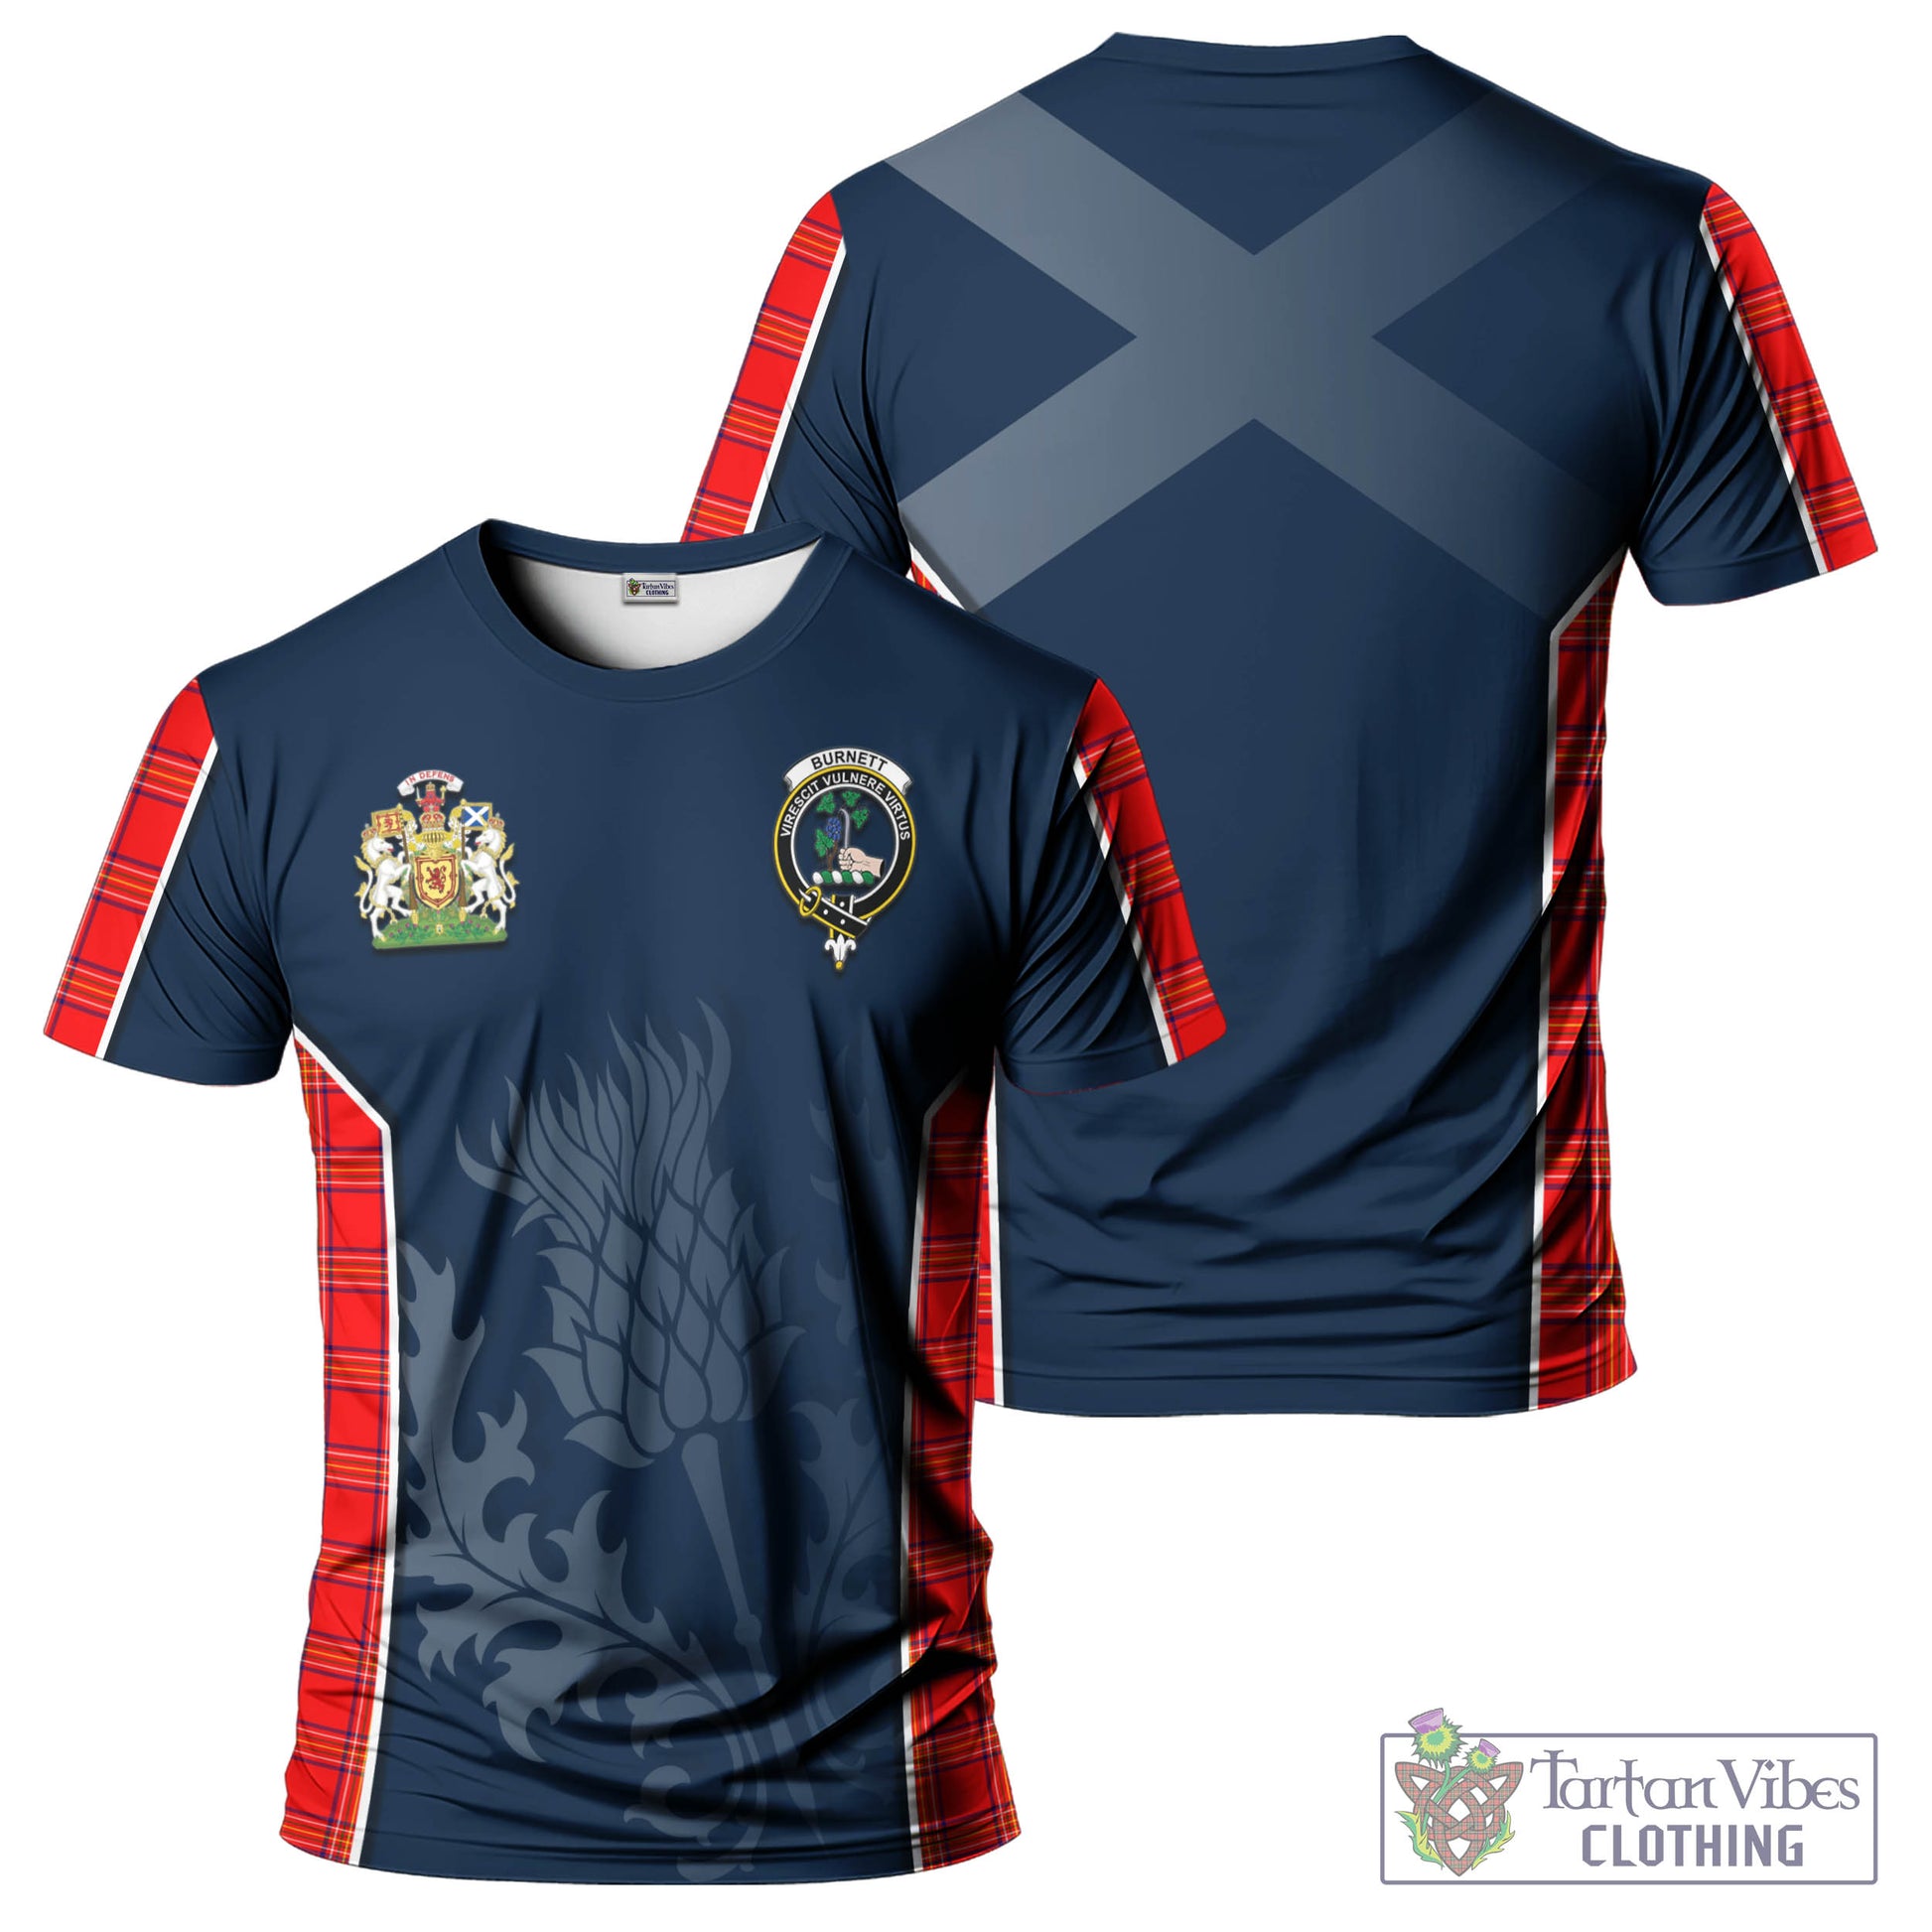 Tartan Vibes Clothing Burnett Modern Tartan T-Shirt with Family Crest and Scottish Thistle Vibes Sport Style